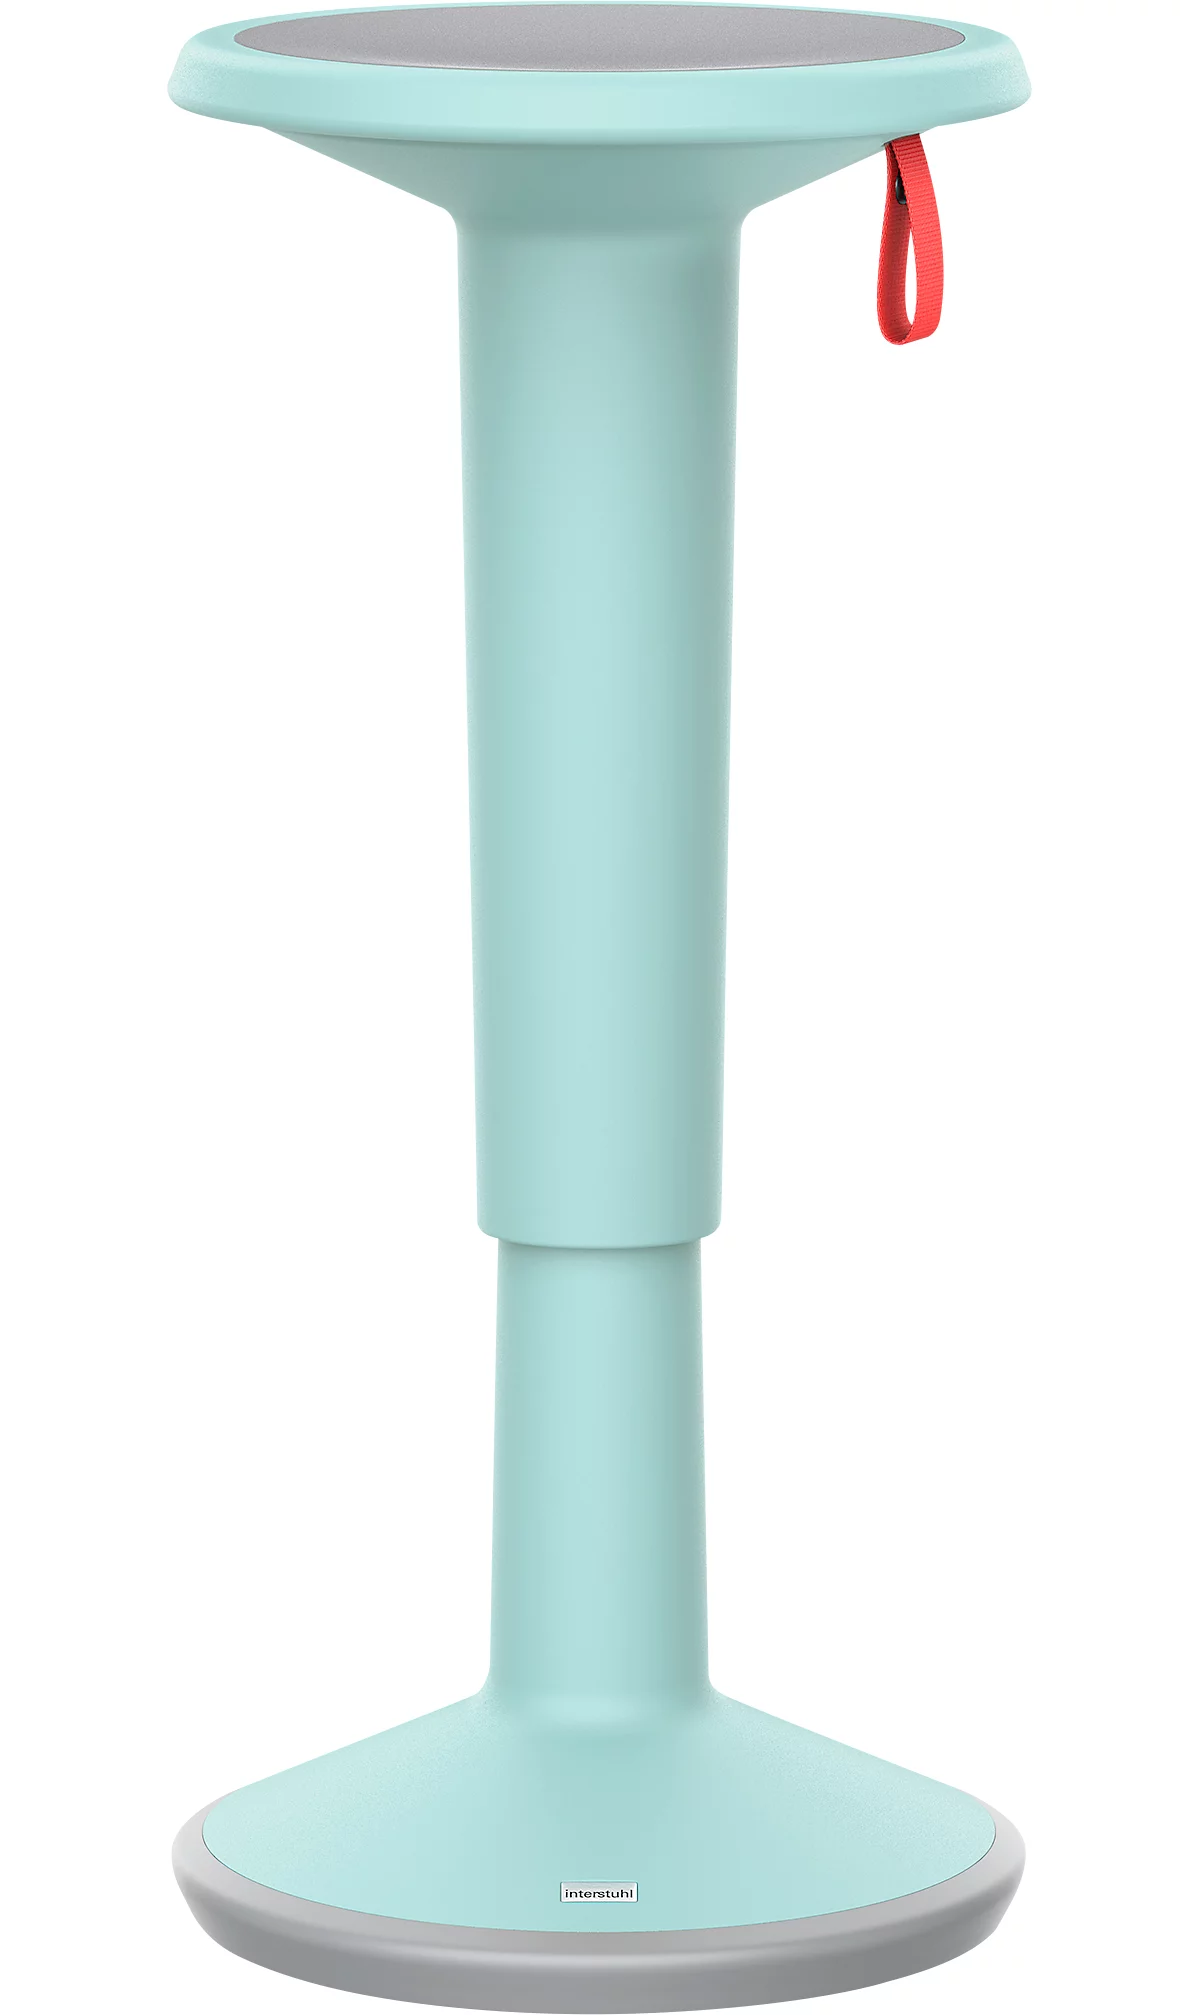 Taburete StandUP regulable en altura, Ø 330 x H 590 - 845 mm turquesa pastel